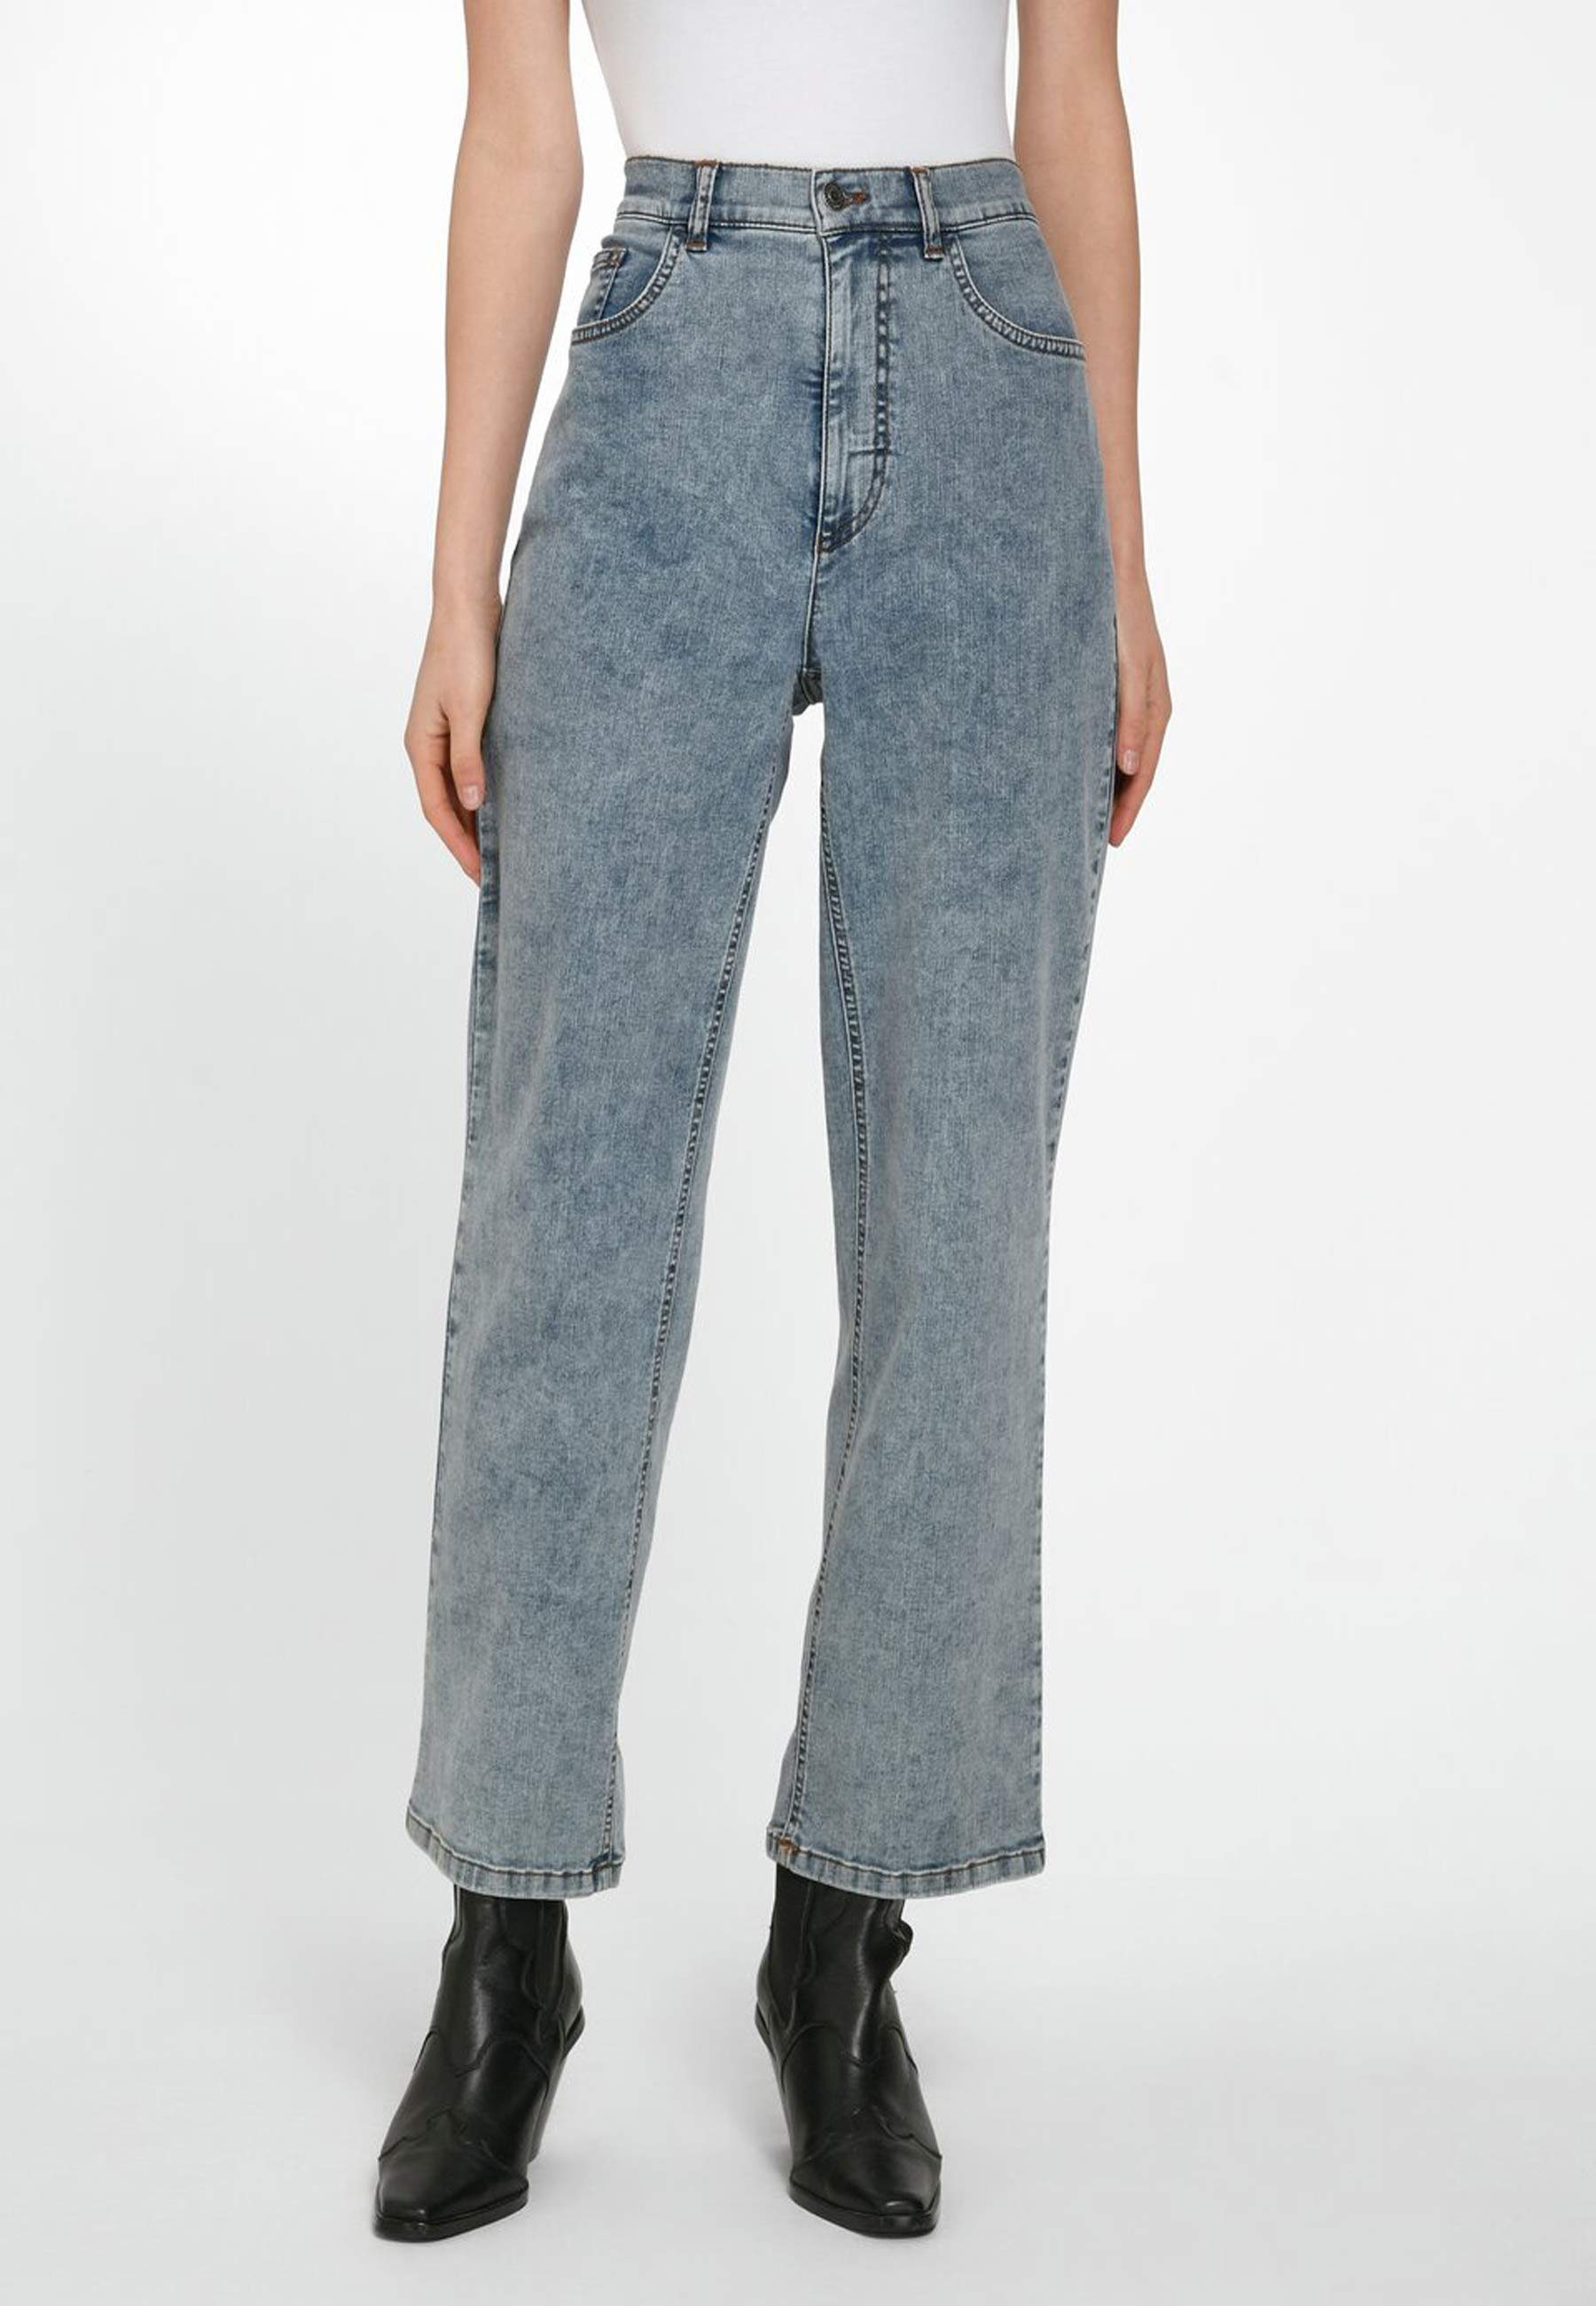 WALL London 5-Pocket-Jeans Cotton mit modernem Design hellblau